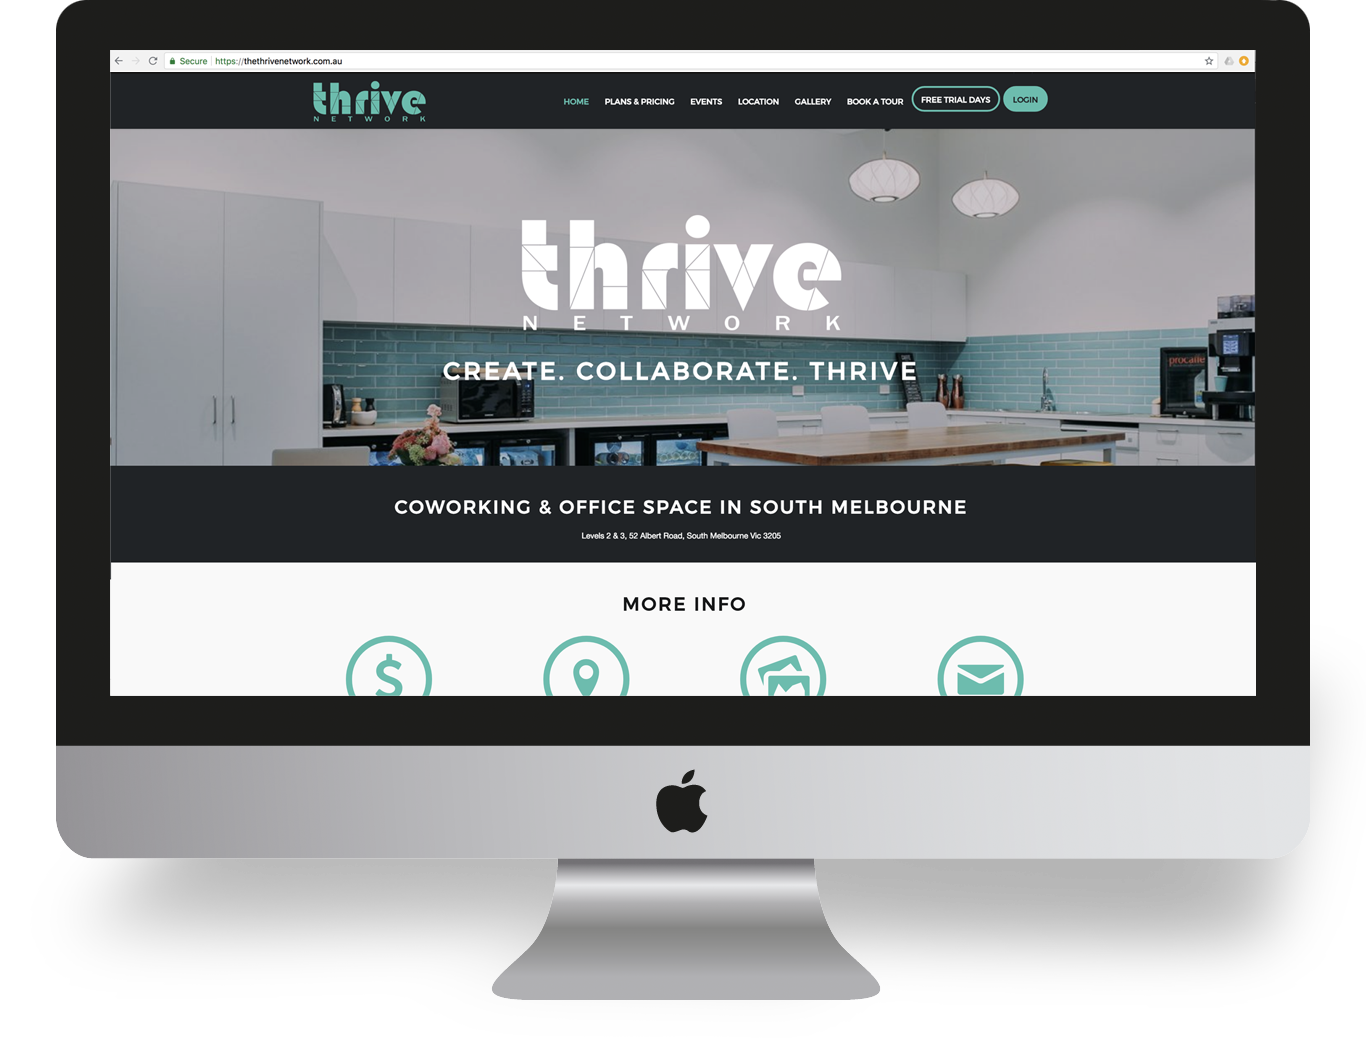 Thrive Network Website Design and Development - Ignite Group Website Development - Miki Media | Melbourne Web Design Services